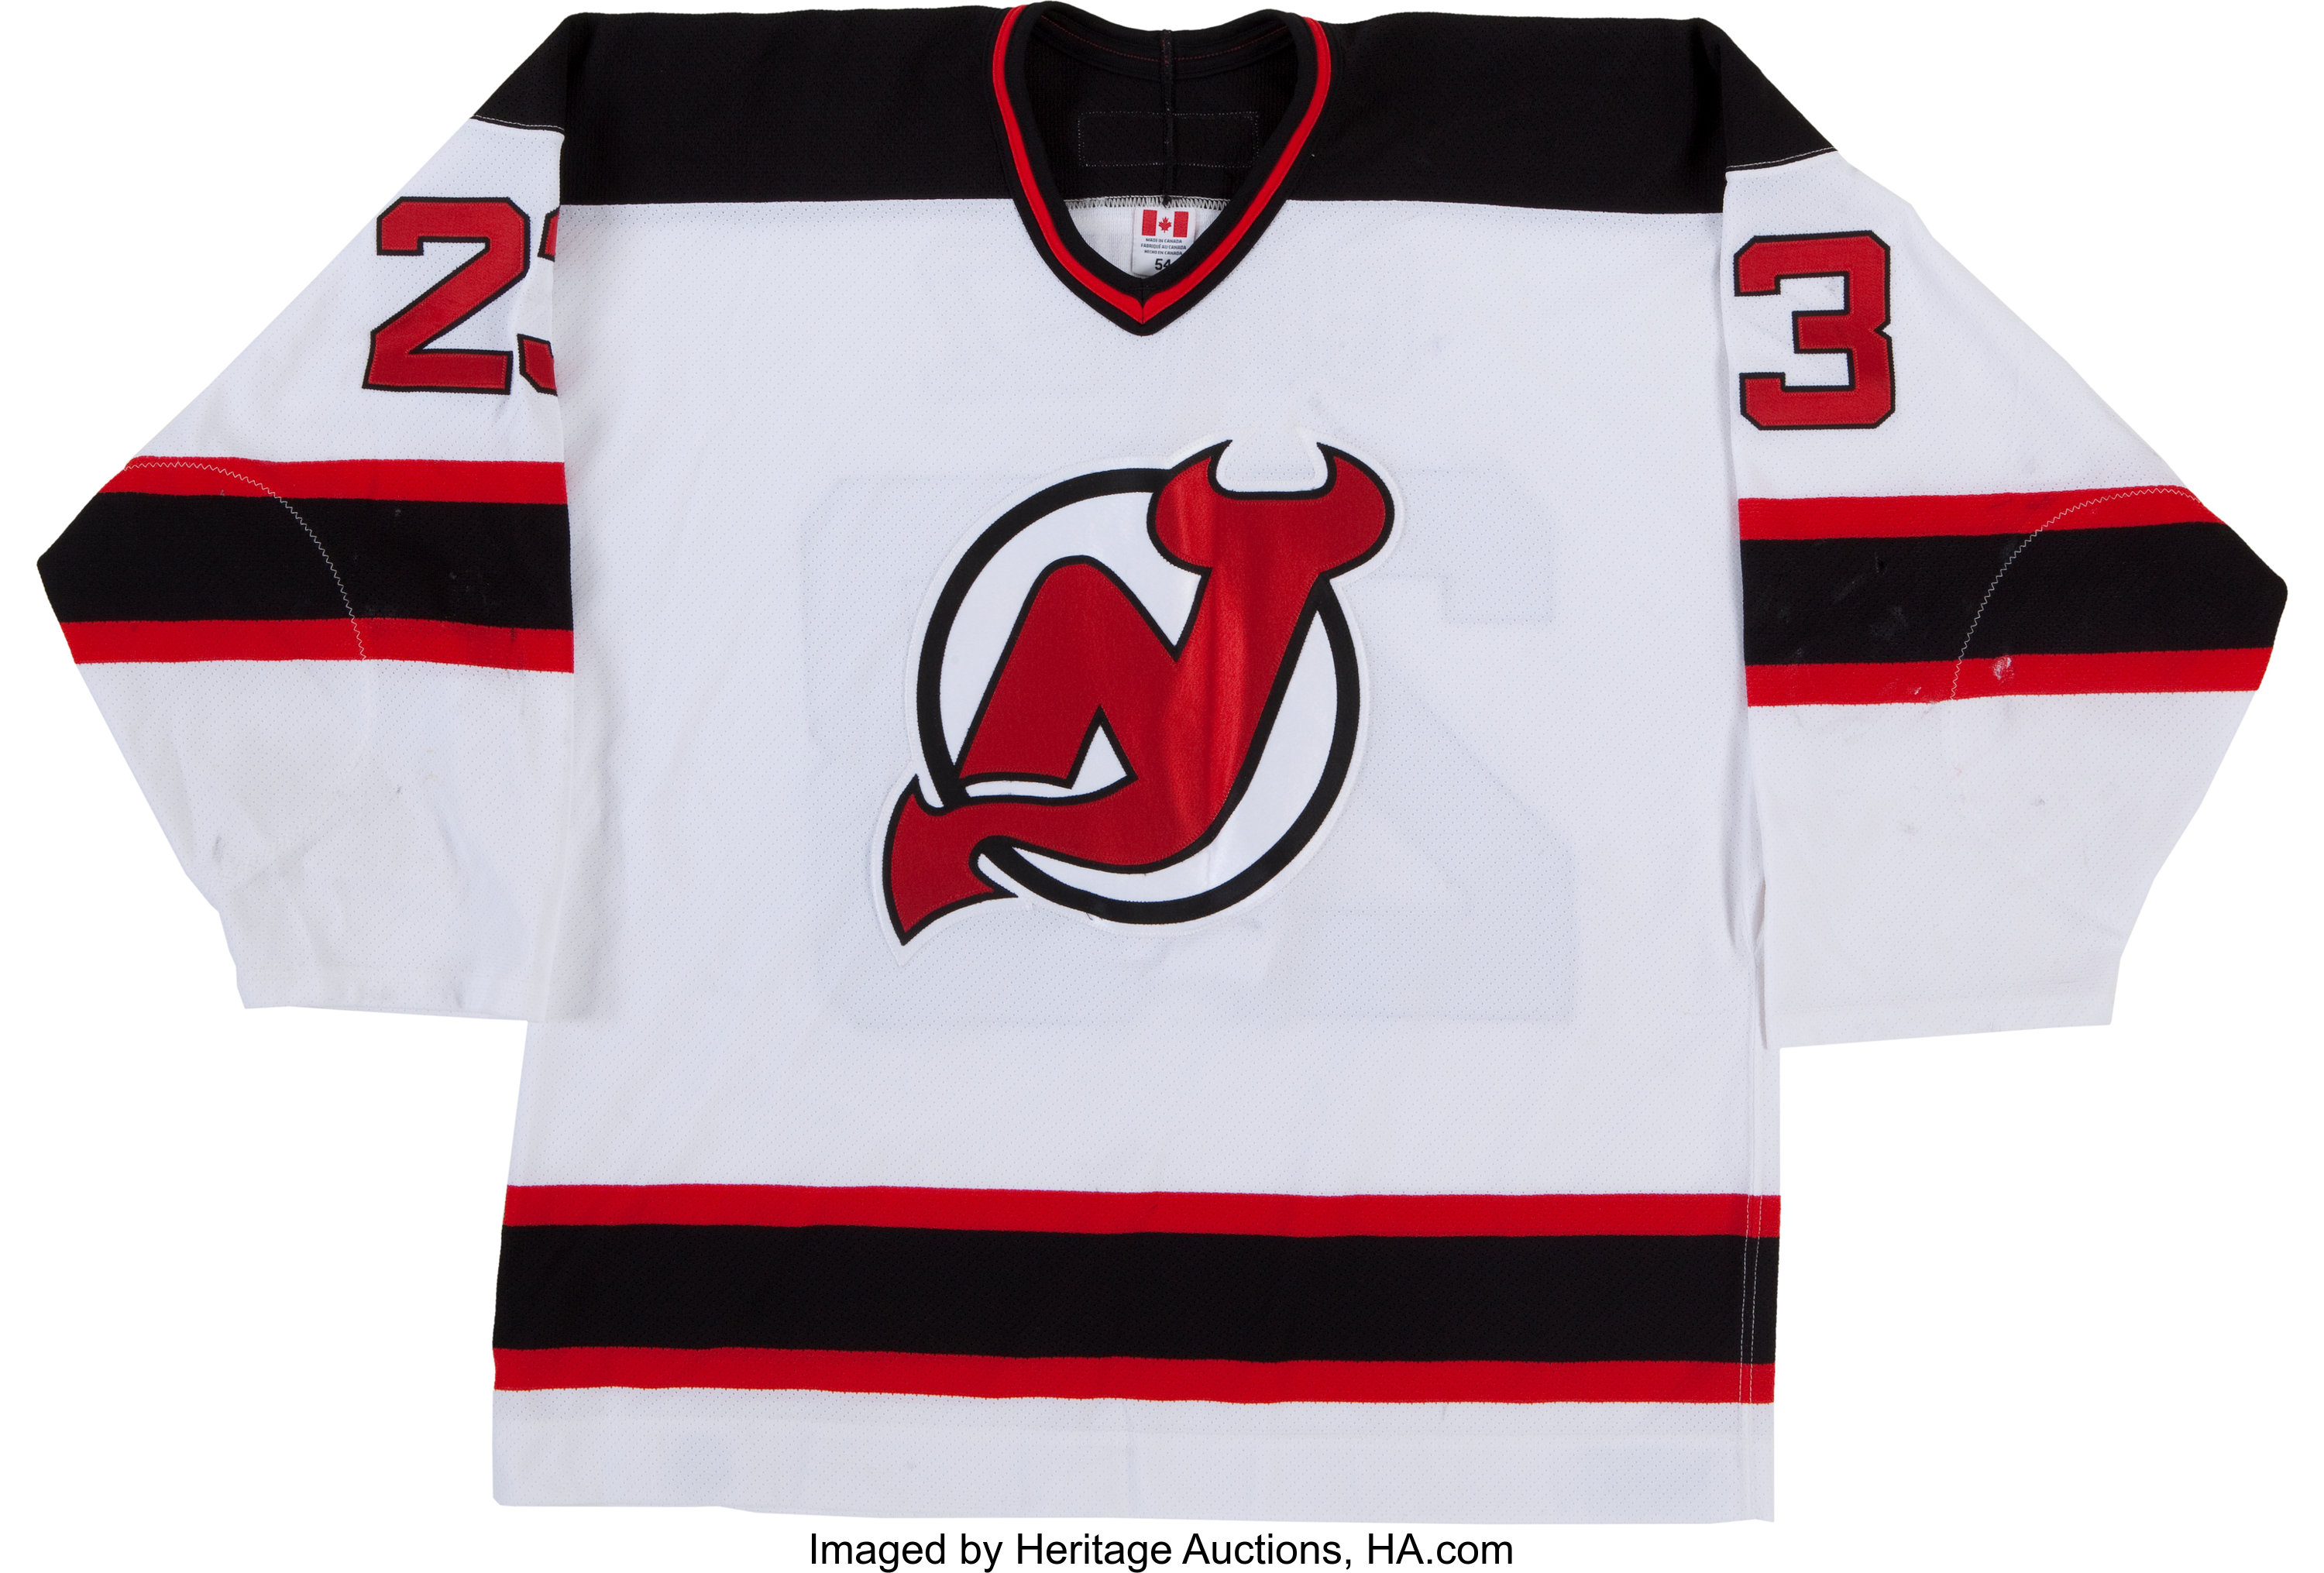 New Jersey Devils: The Legacy of Scott Gomez